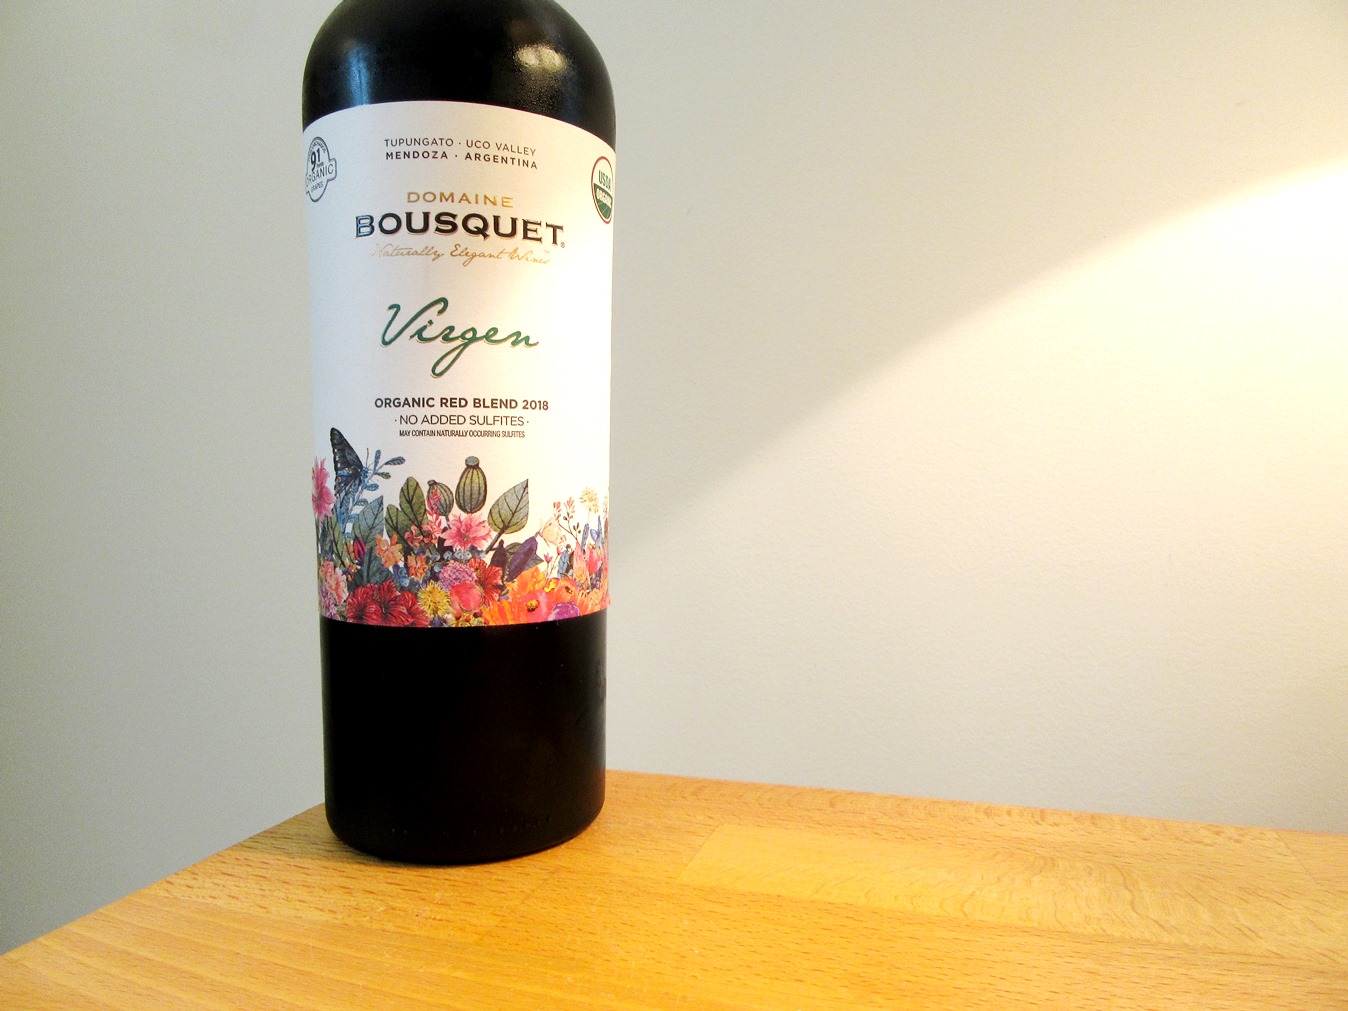 Domaine Bousquet, Virgen Organic Red Blend 2018, Tupungato, Uco Valley, Mendoza, Argentina, Wine Casual